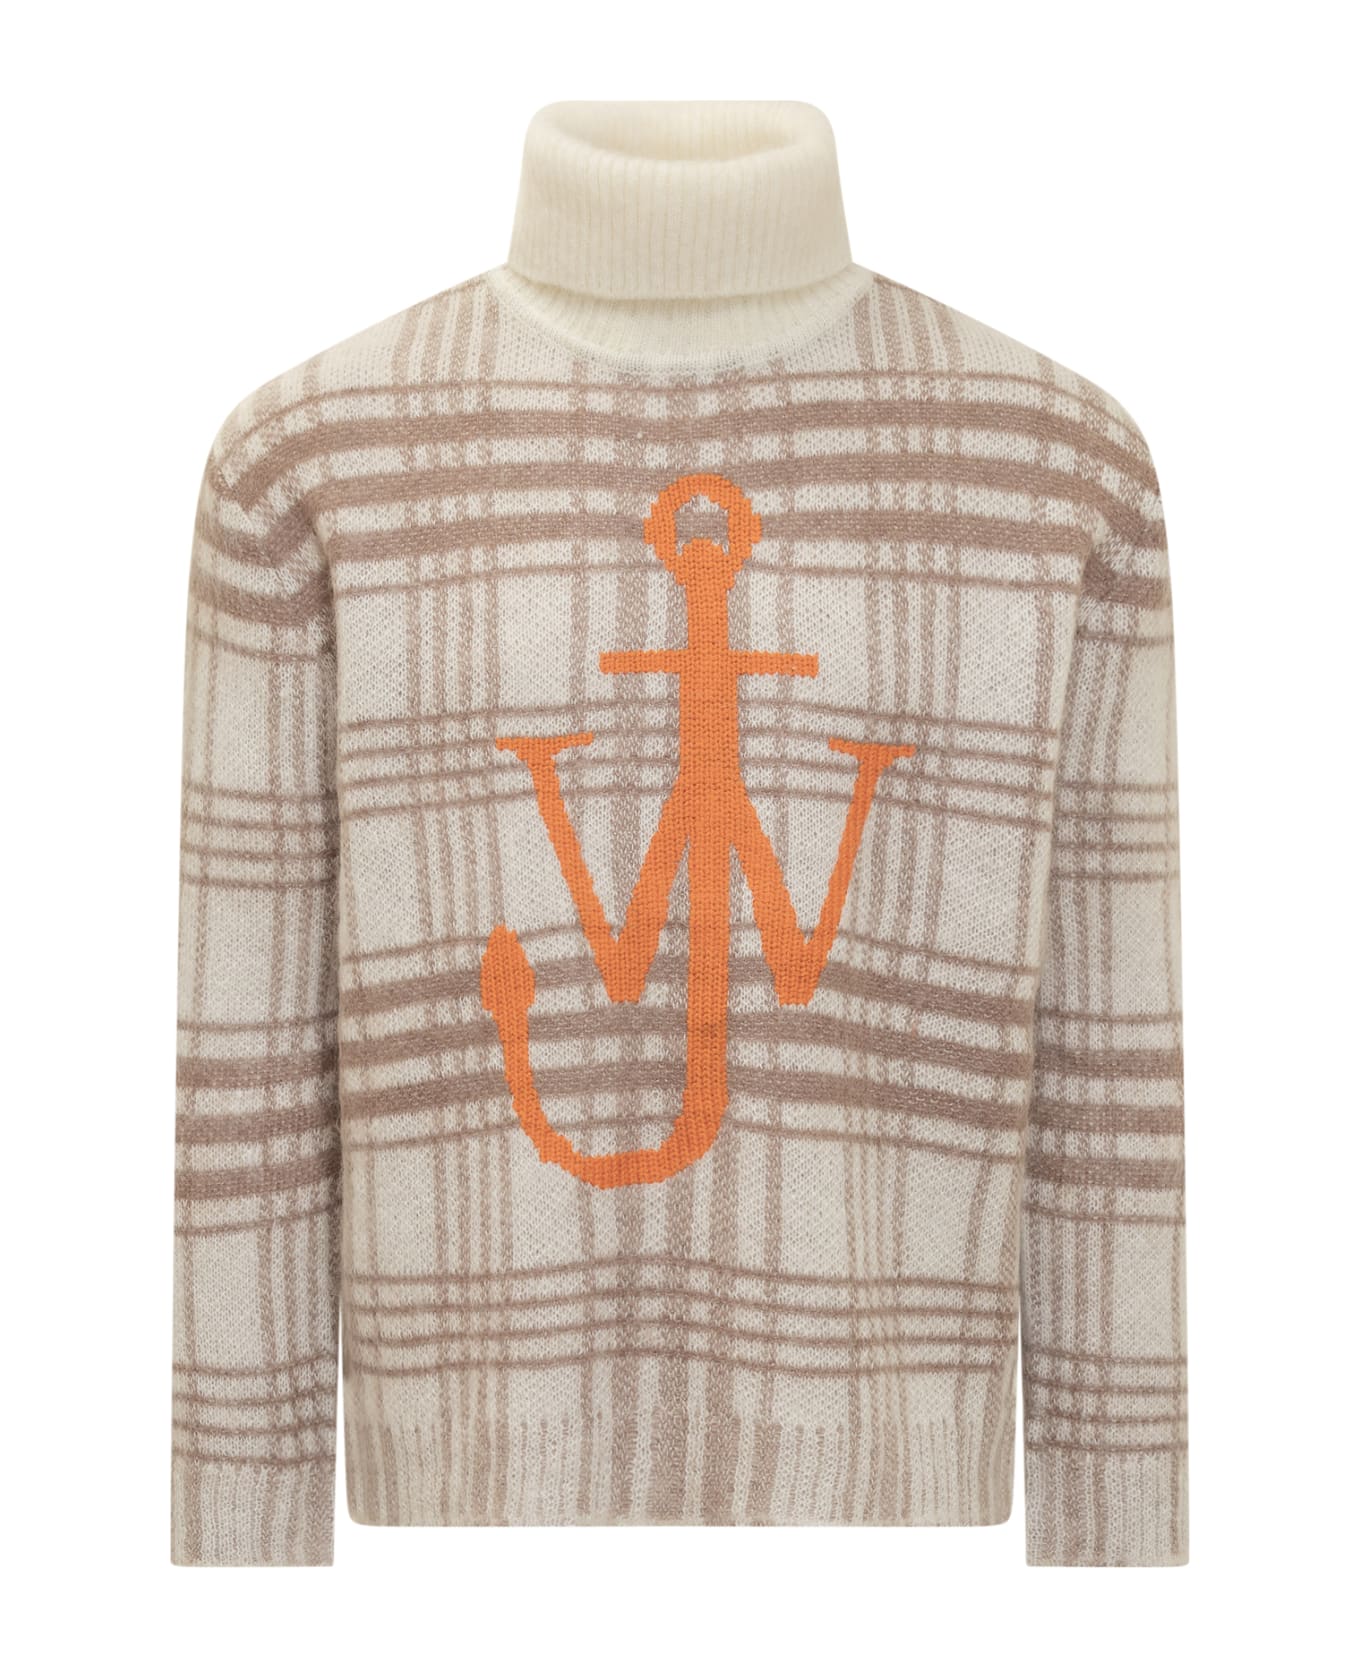 J.W. Anderson Tartan Turtleneck Sweater - OFF WHITE/BROWN